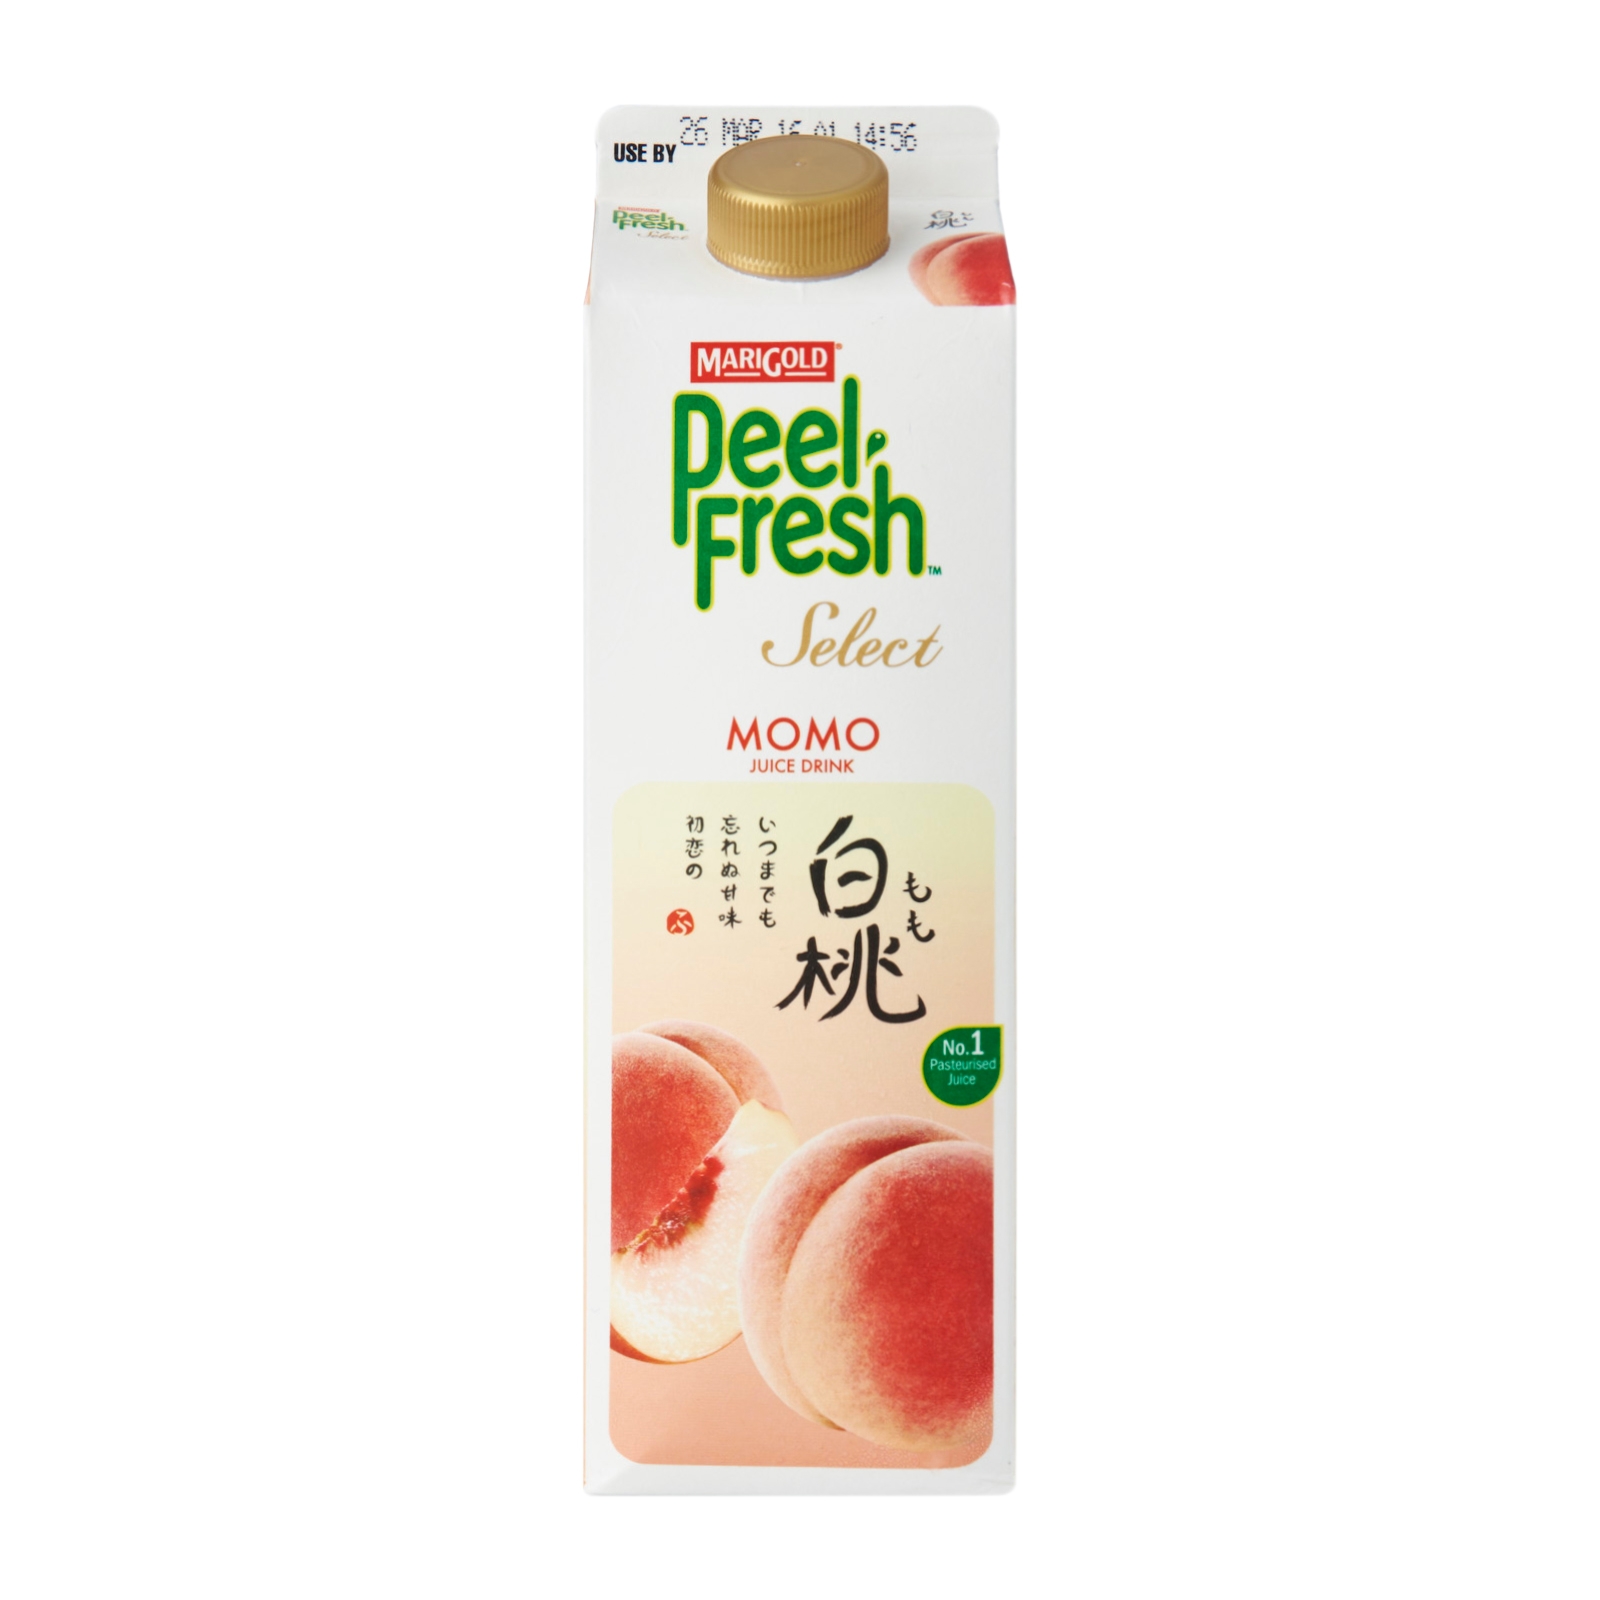 Boon SuperMarket - MARIGOLD PEEL FRESH MOMO SELECT JUICE DRINK 1.0 L